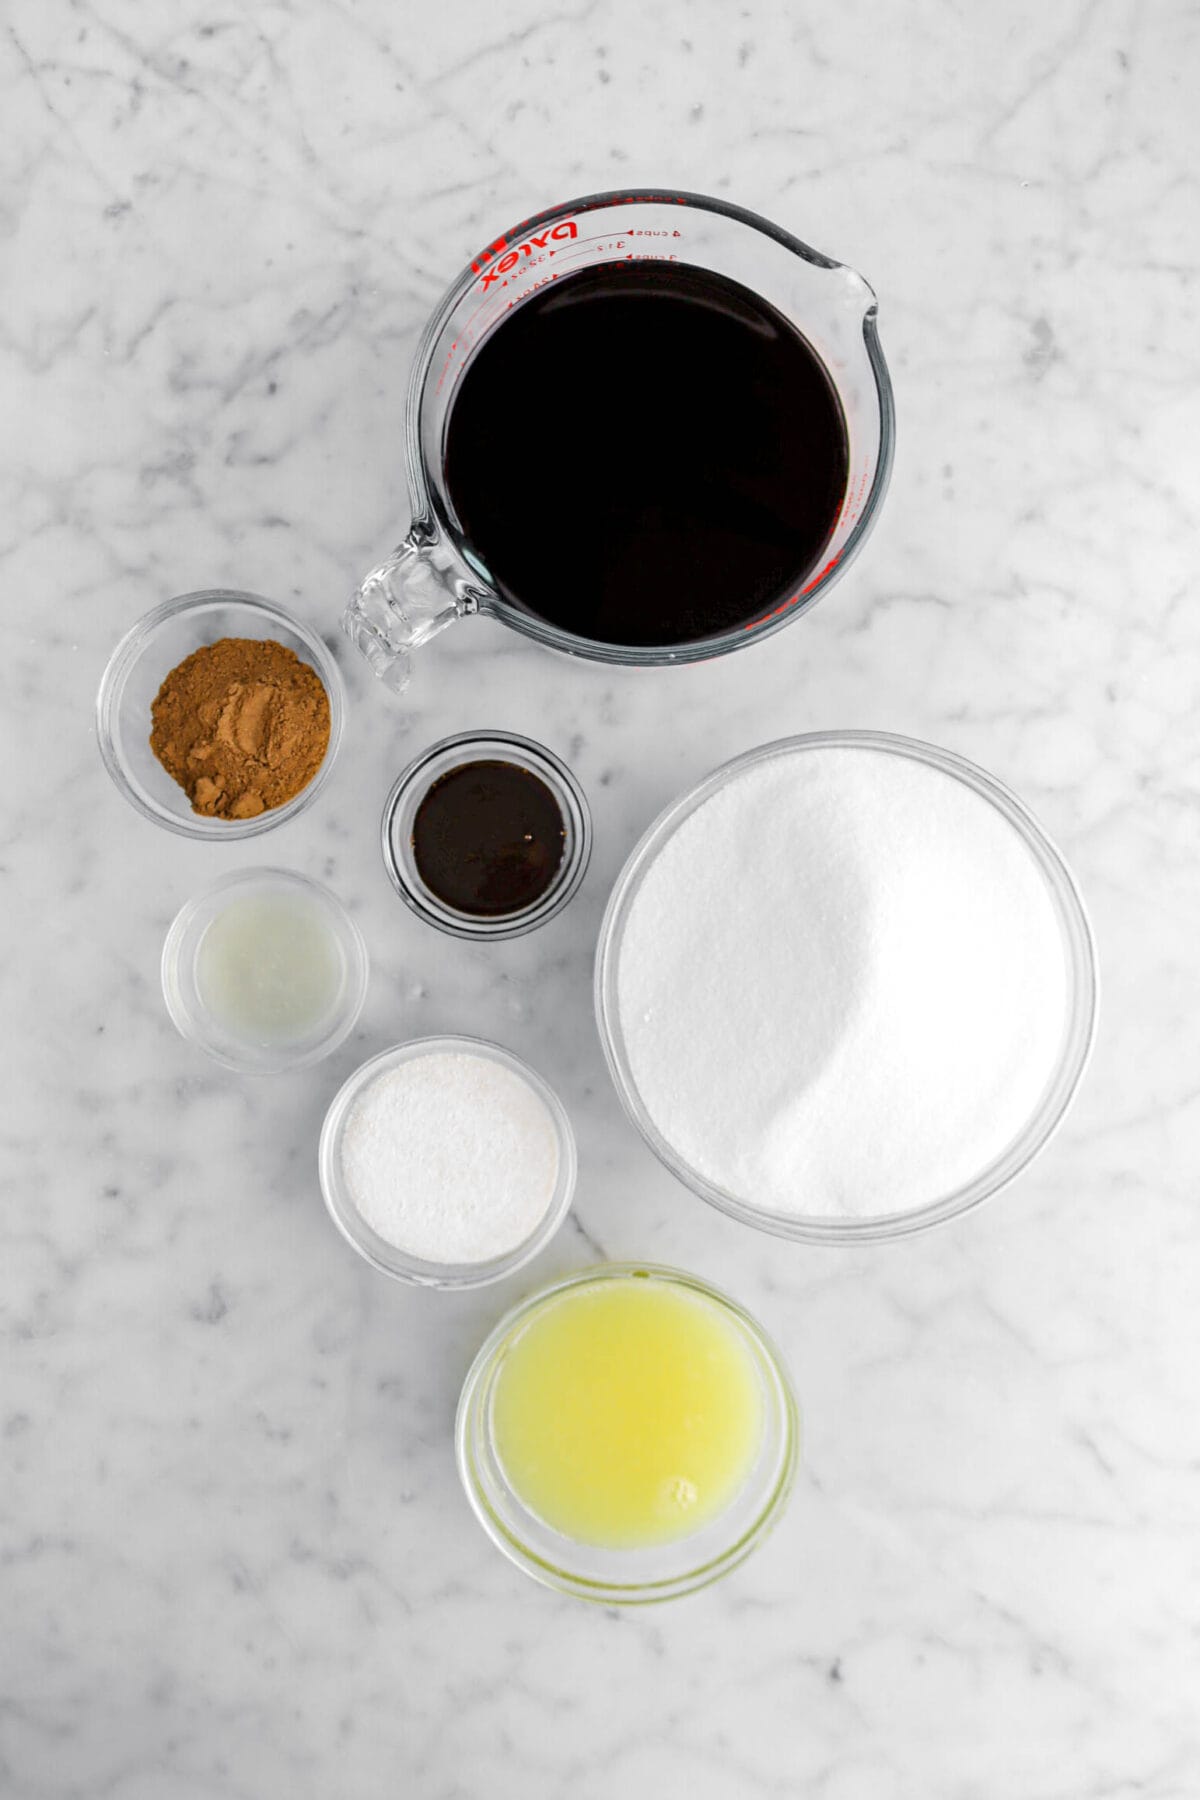 wine, ground spices, molasses, lemon juice, pectin, sugar, and orange juice on marble surface.